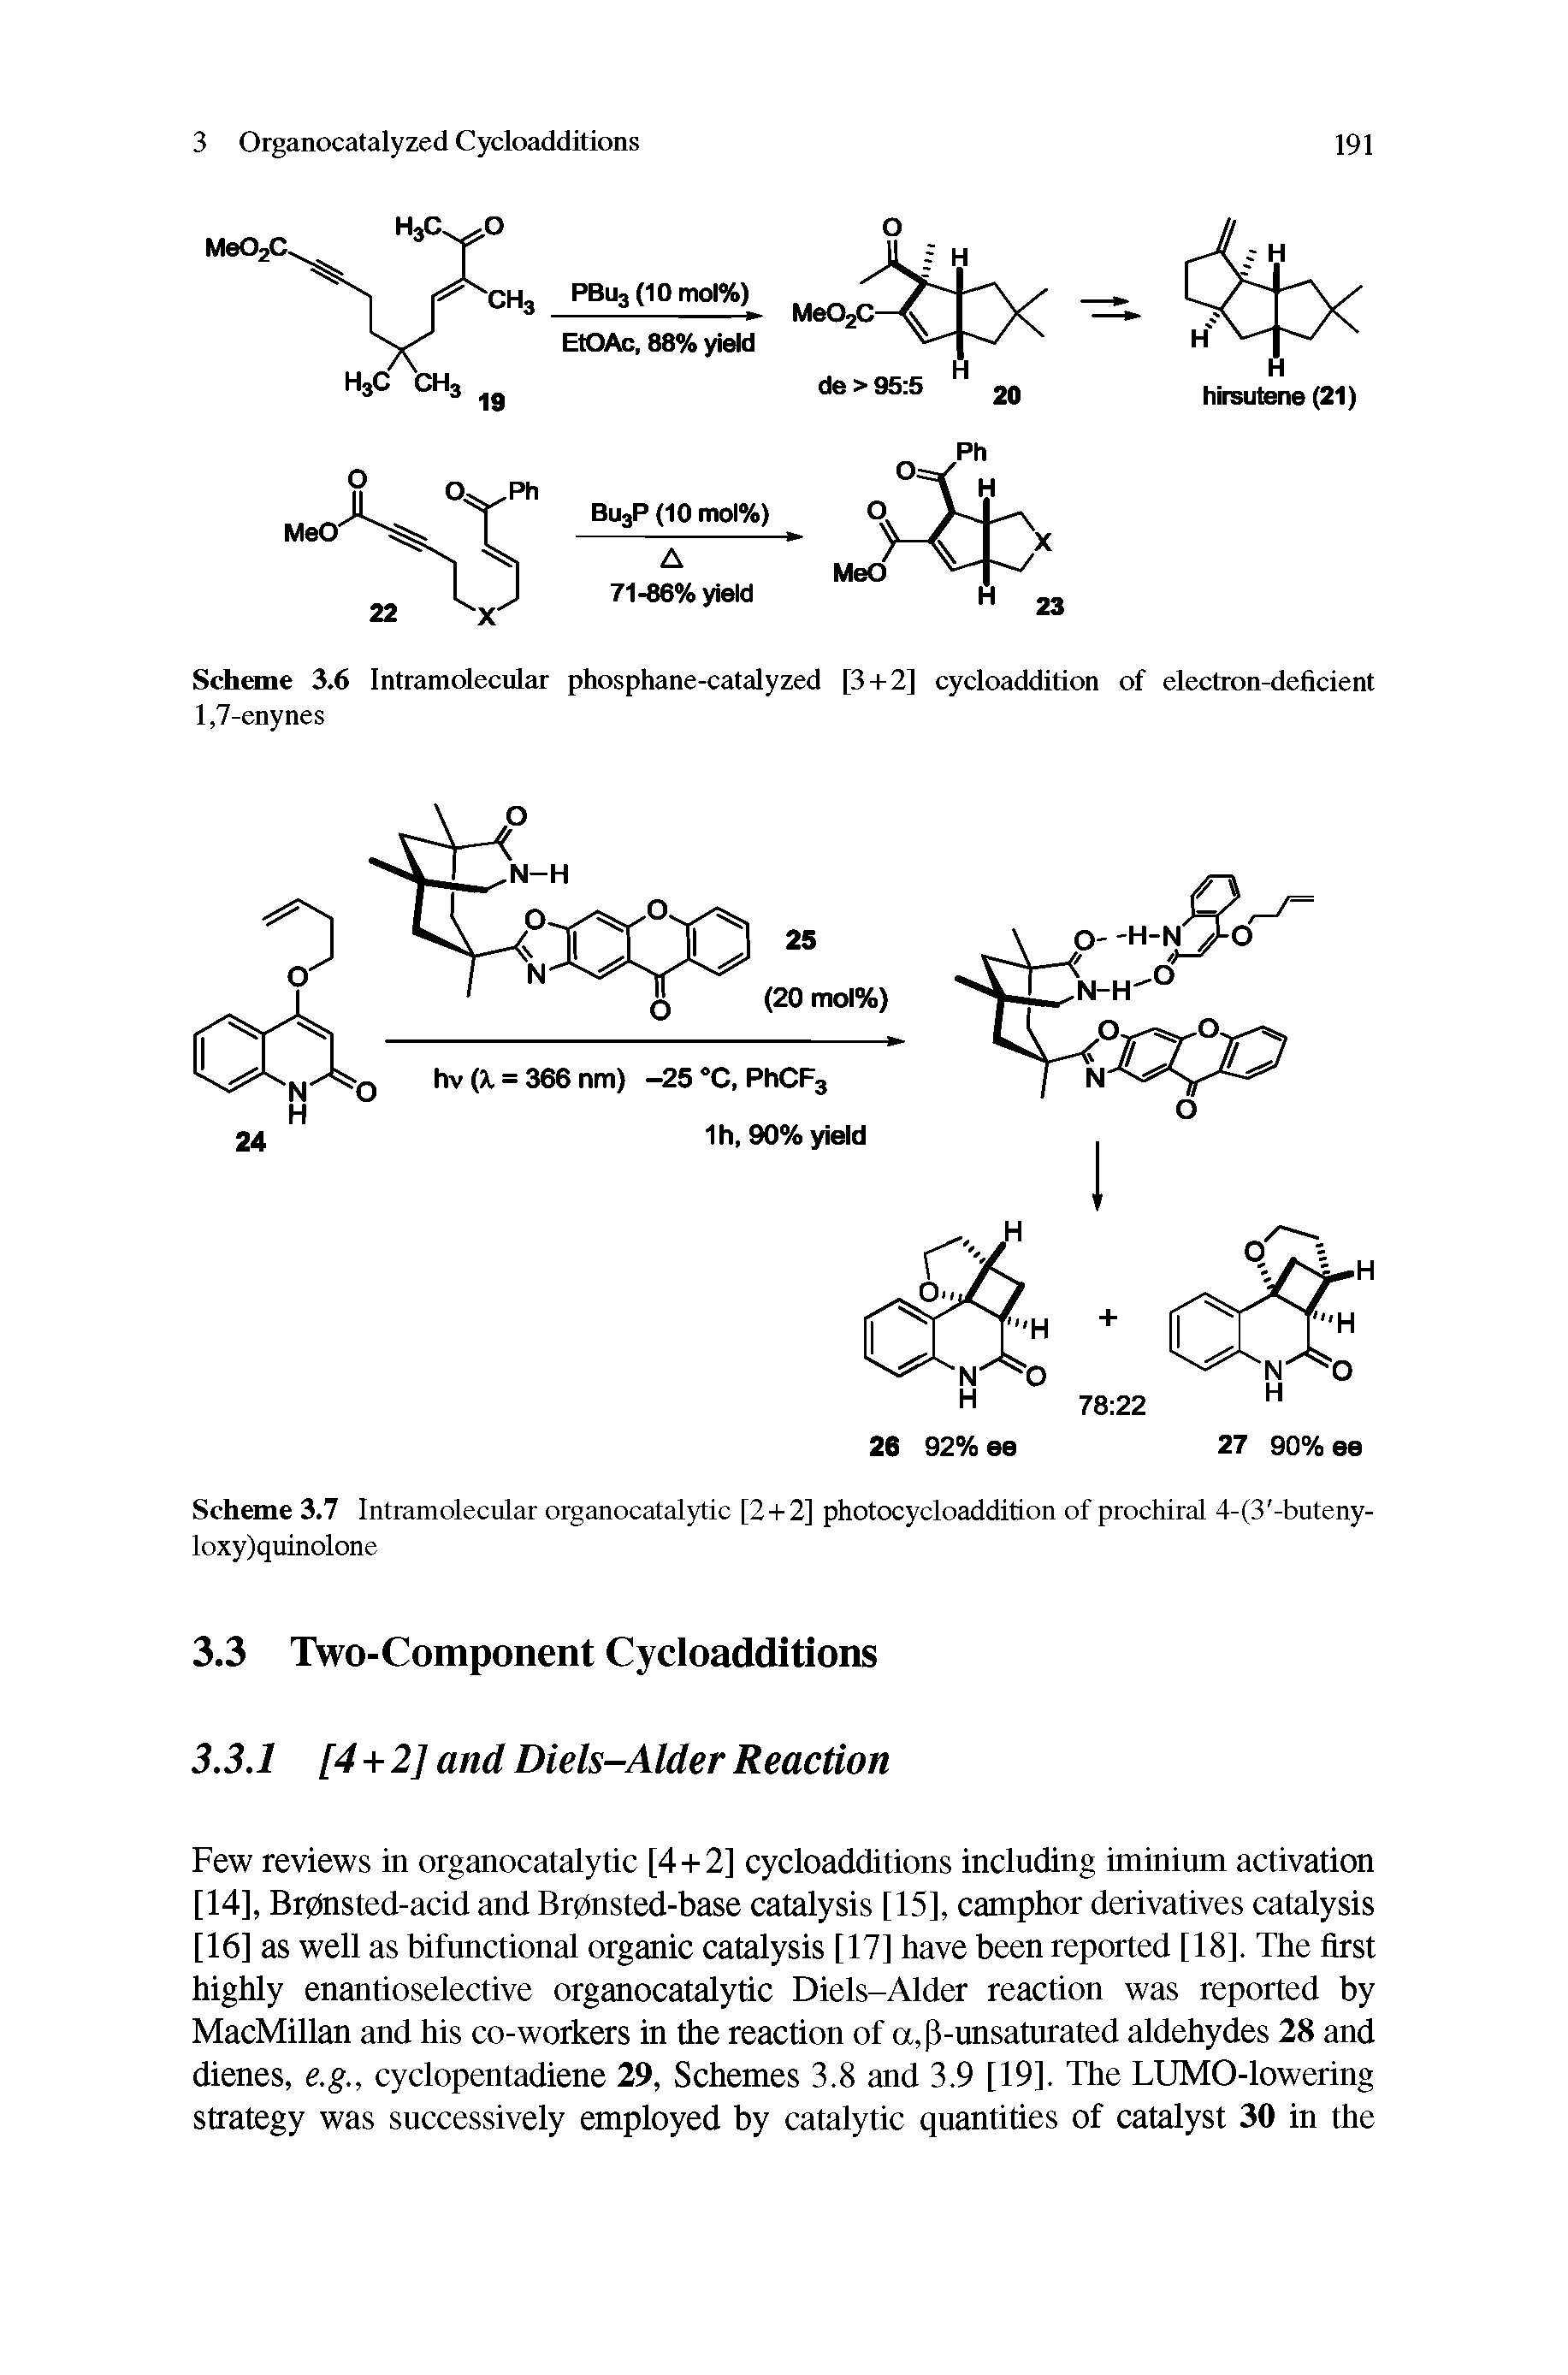 Scheme 3.6 Intramolecular phosphane-catalyzed [3 + 2] cycloaddition of electron-deficient 1,7-enynes...